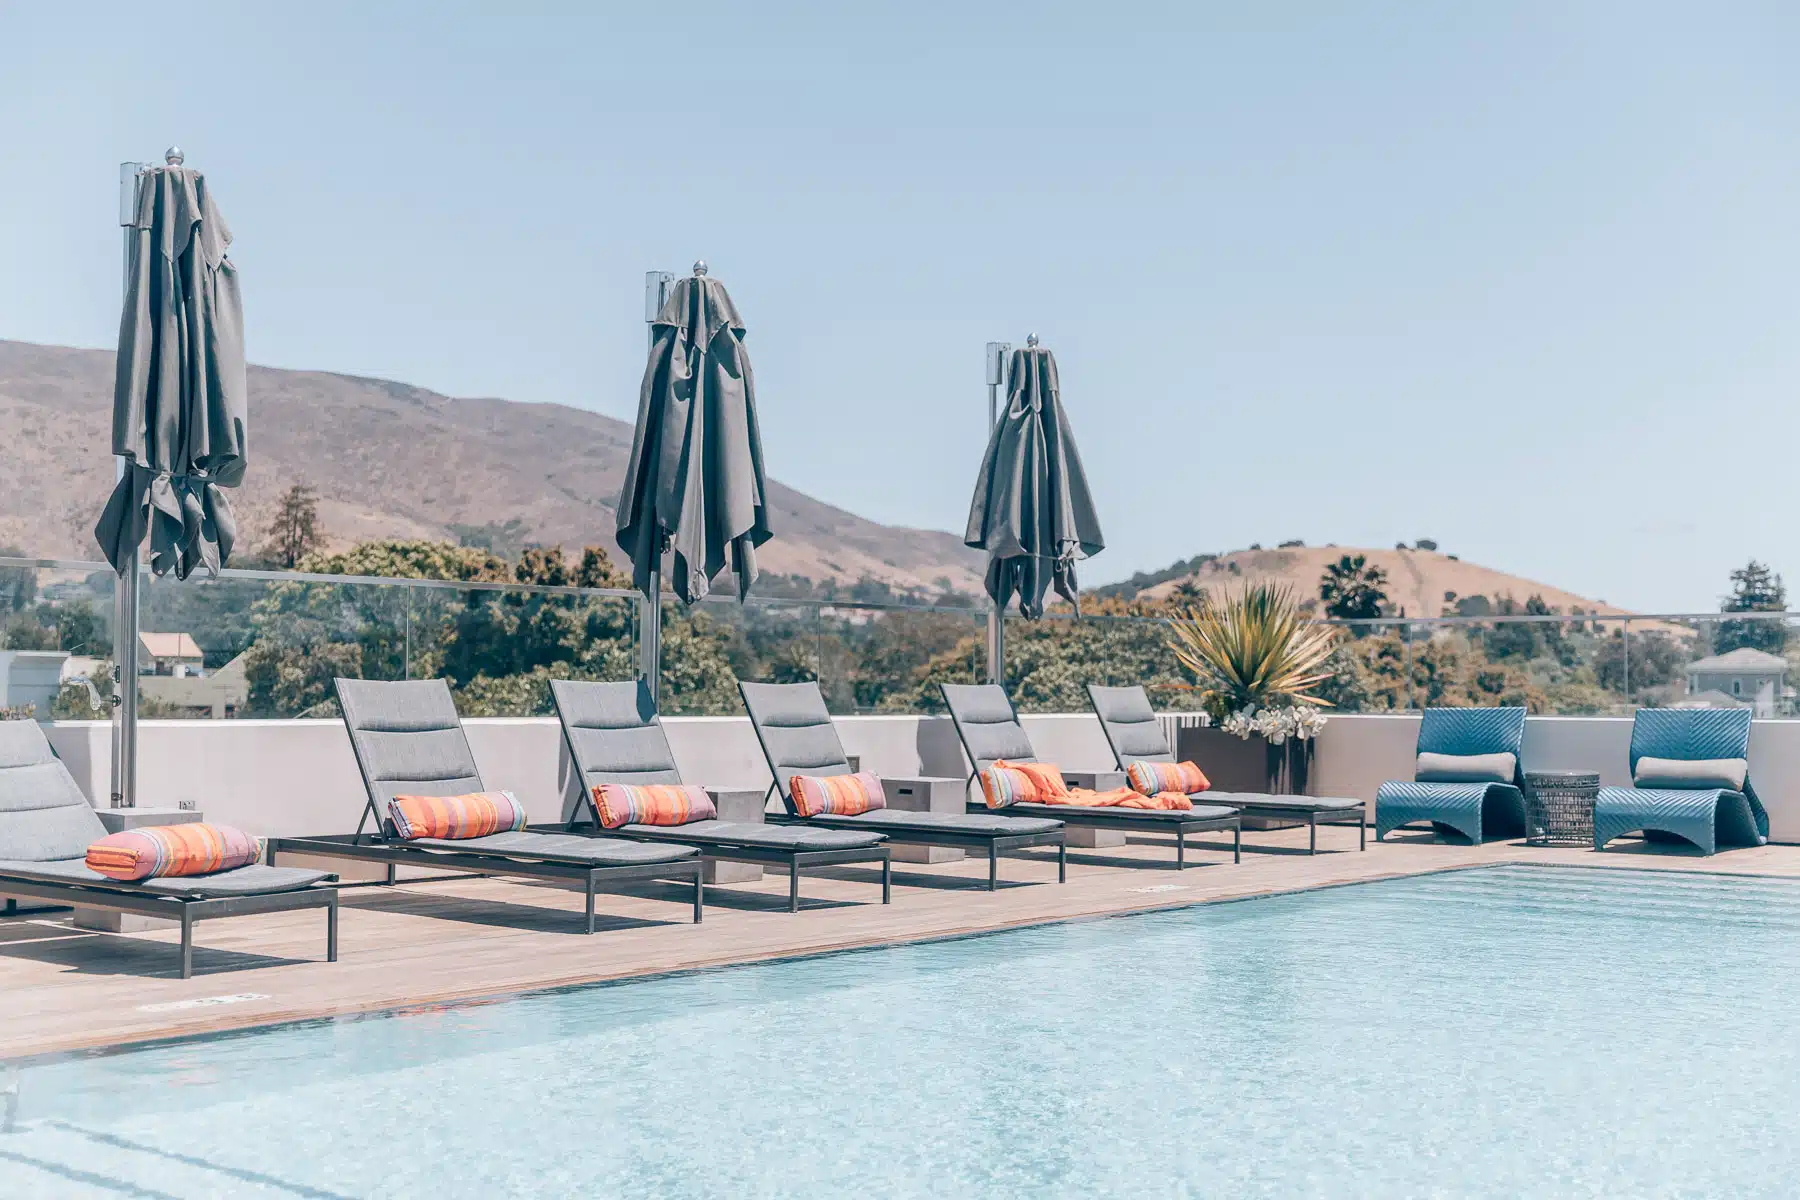 Hotel Cerro San Luis Obispo, by travel blogger What The Fab